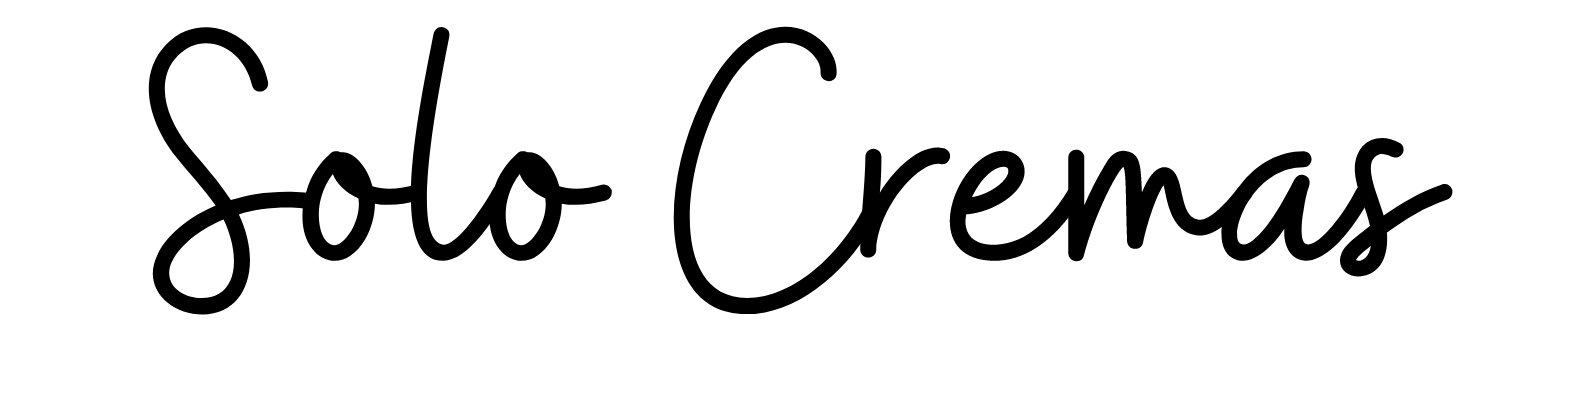 Logo Solo Cremas, Handwriting